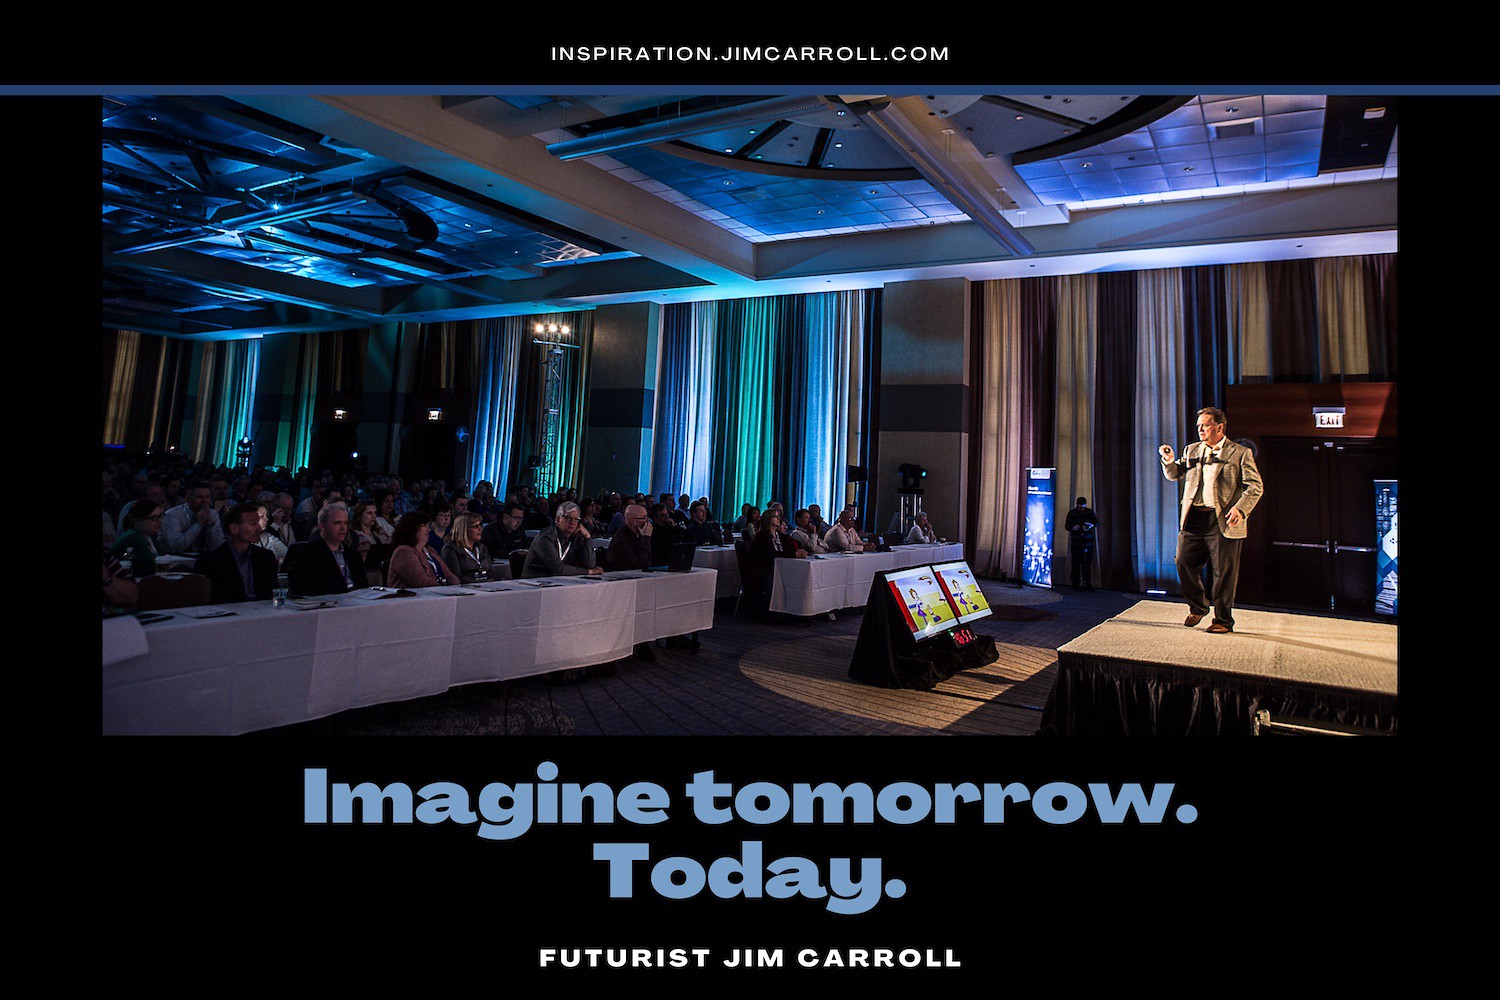 "Imagine Tomorrow. Today." - Futurist Jim Carroll